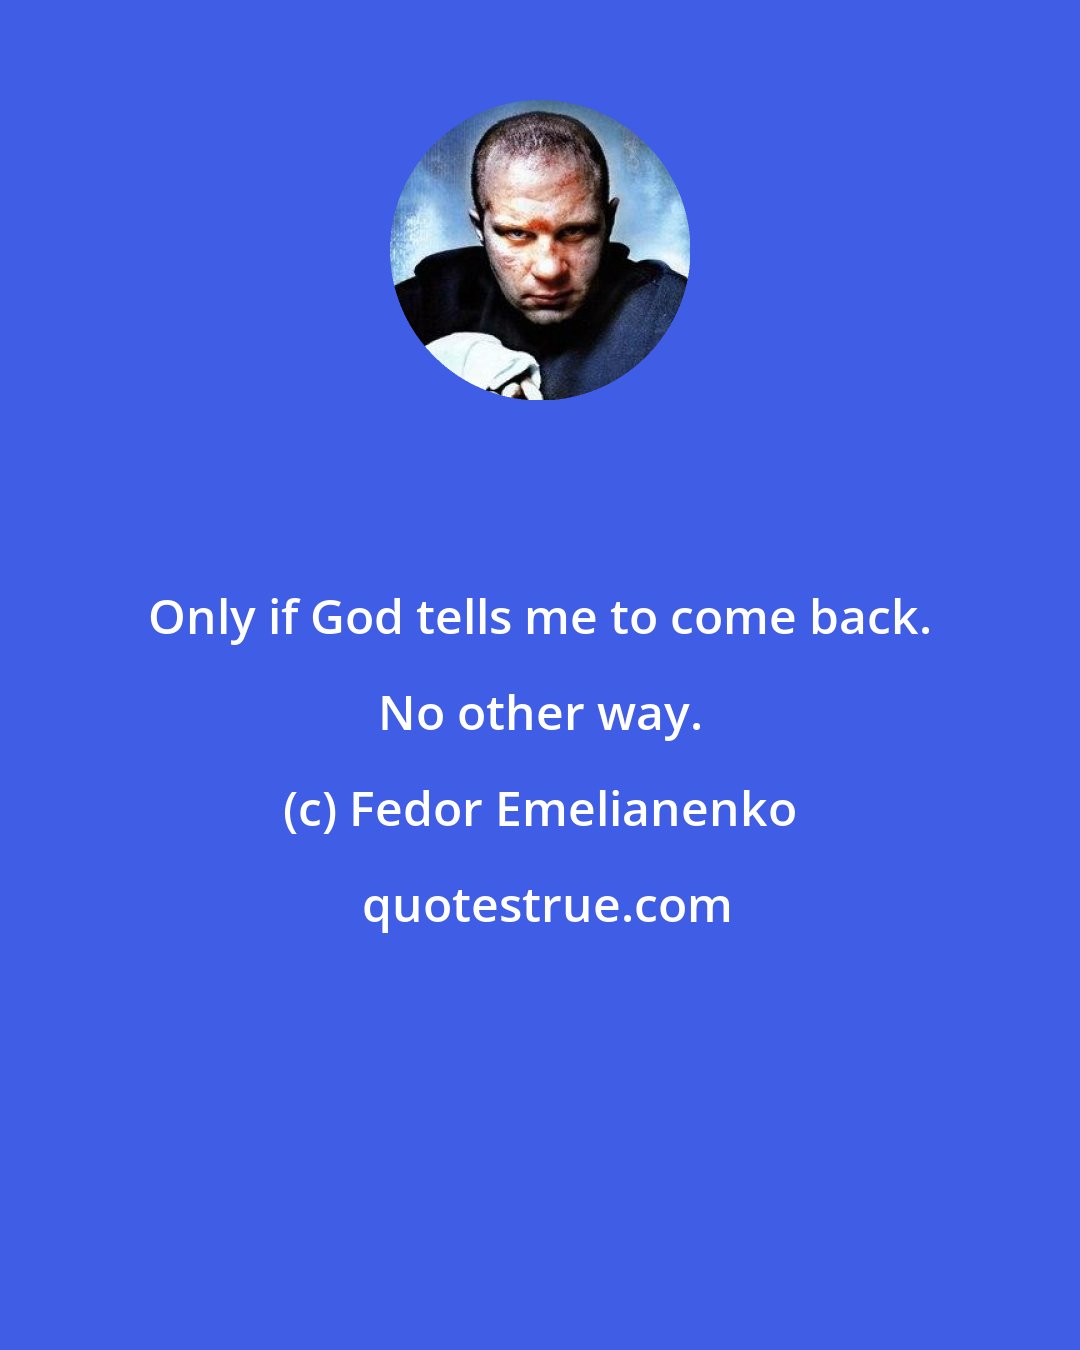 Fedor Emelianenko: Only if God tells me to come back. No other way.